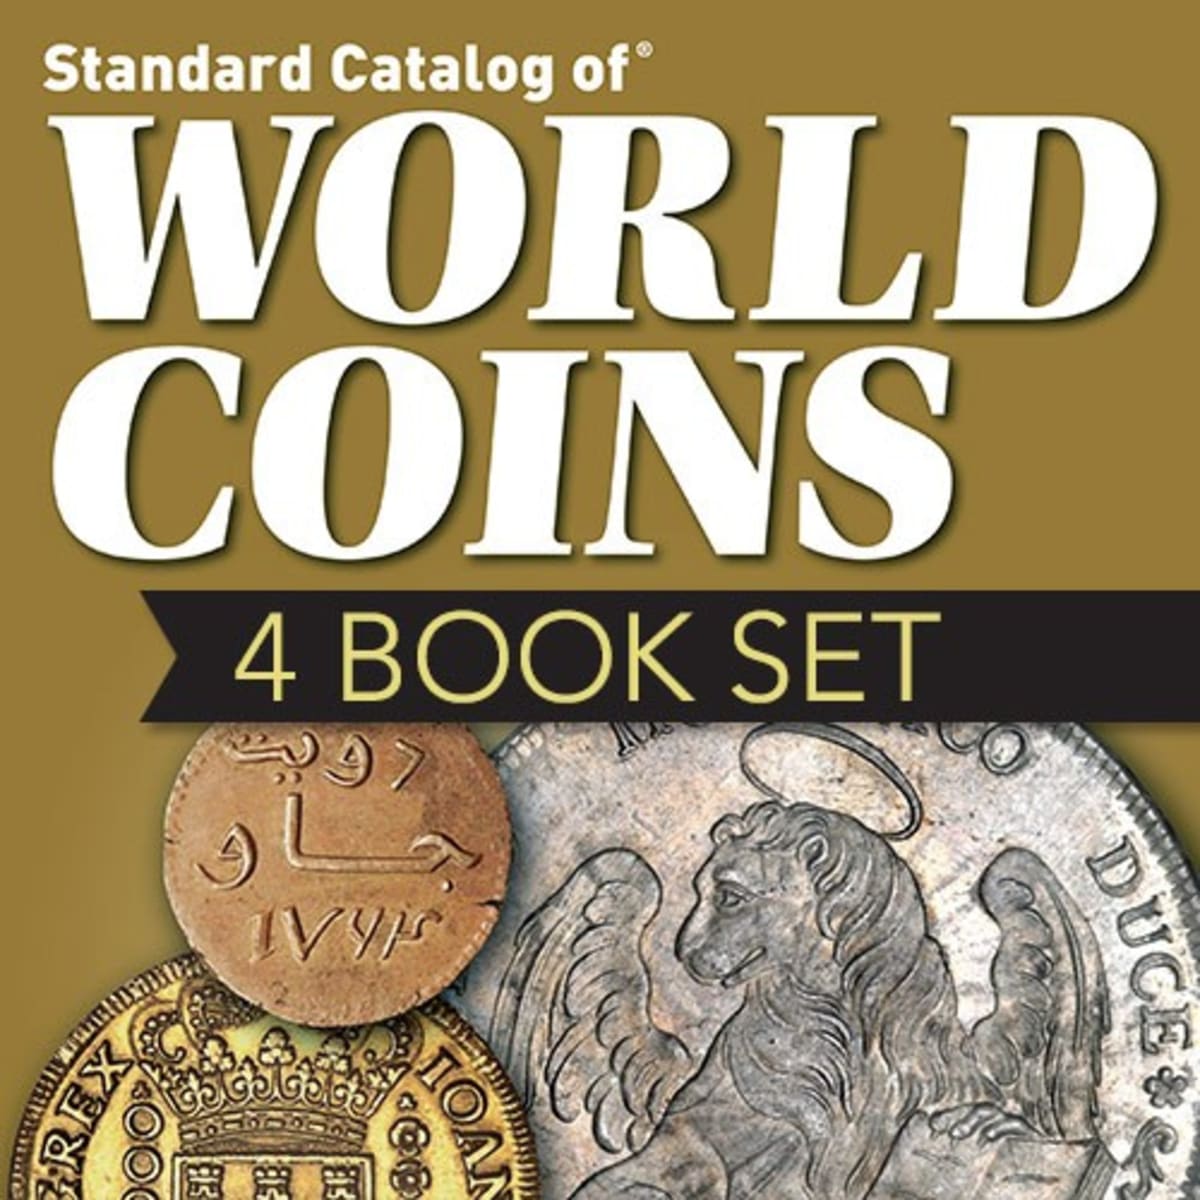 Standard Catalog of World Coins 4 Book Set - Numismatic News